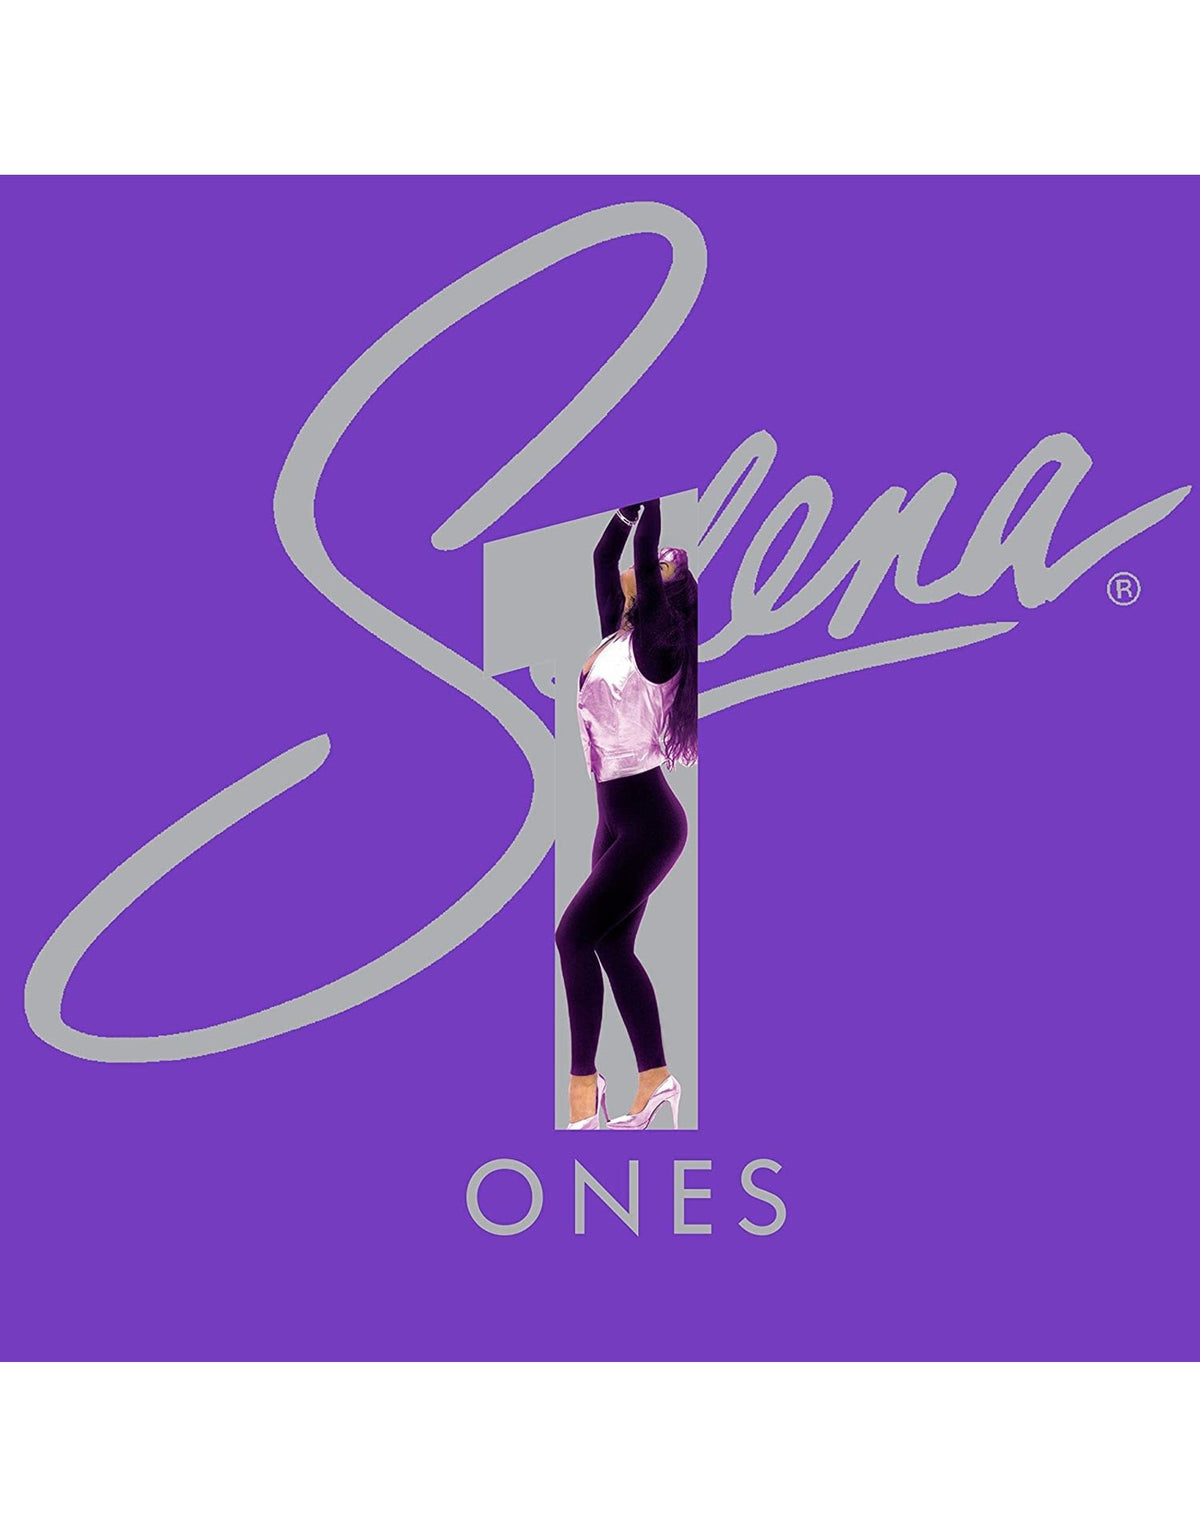 Selena - Ones (2020 Edition) (LP)